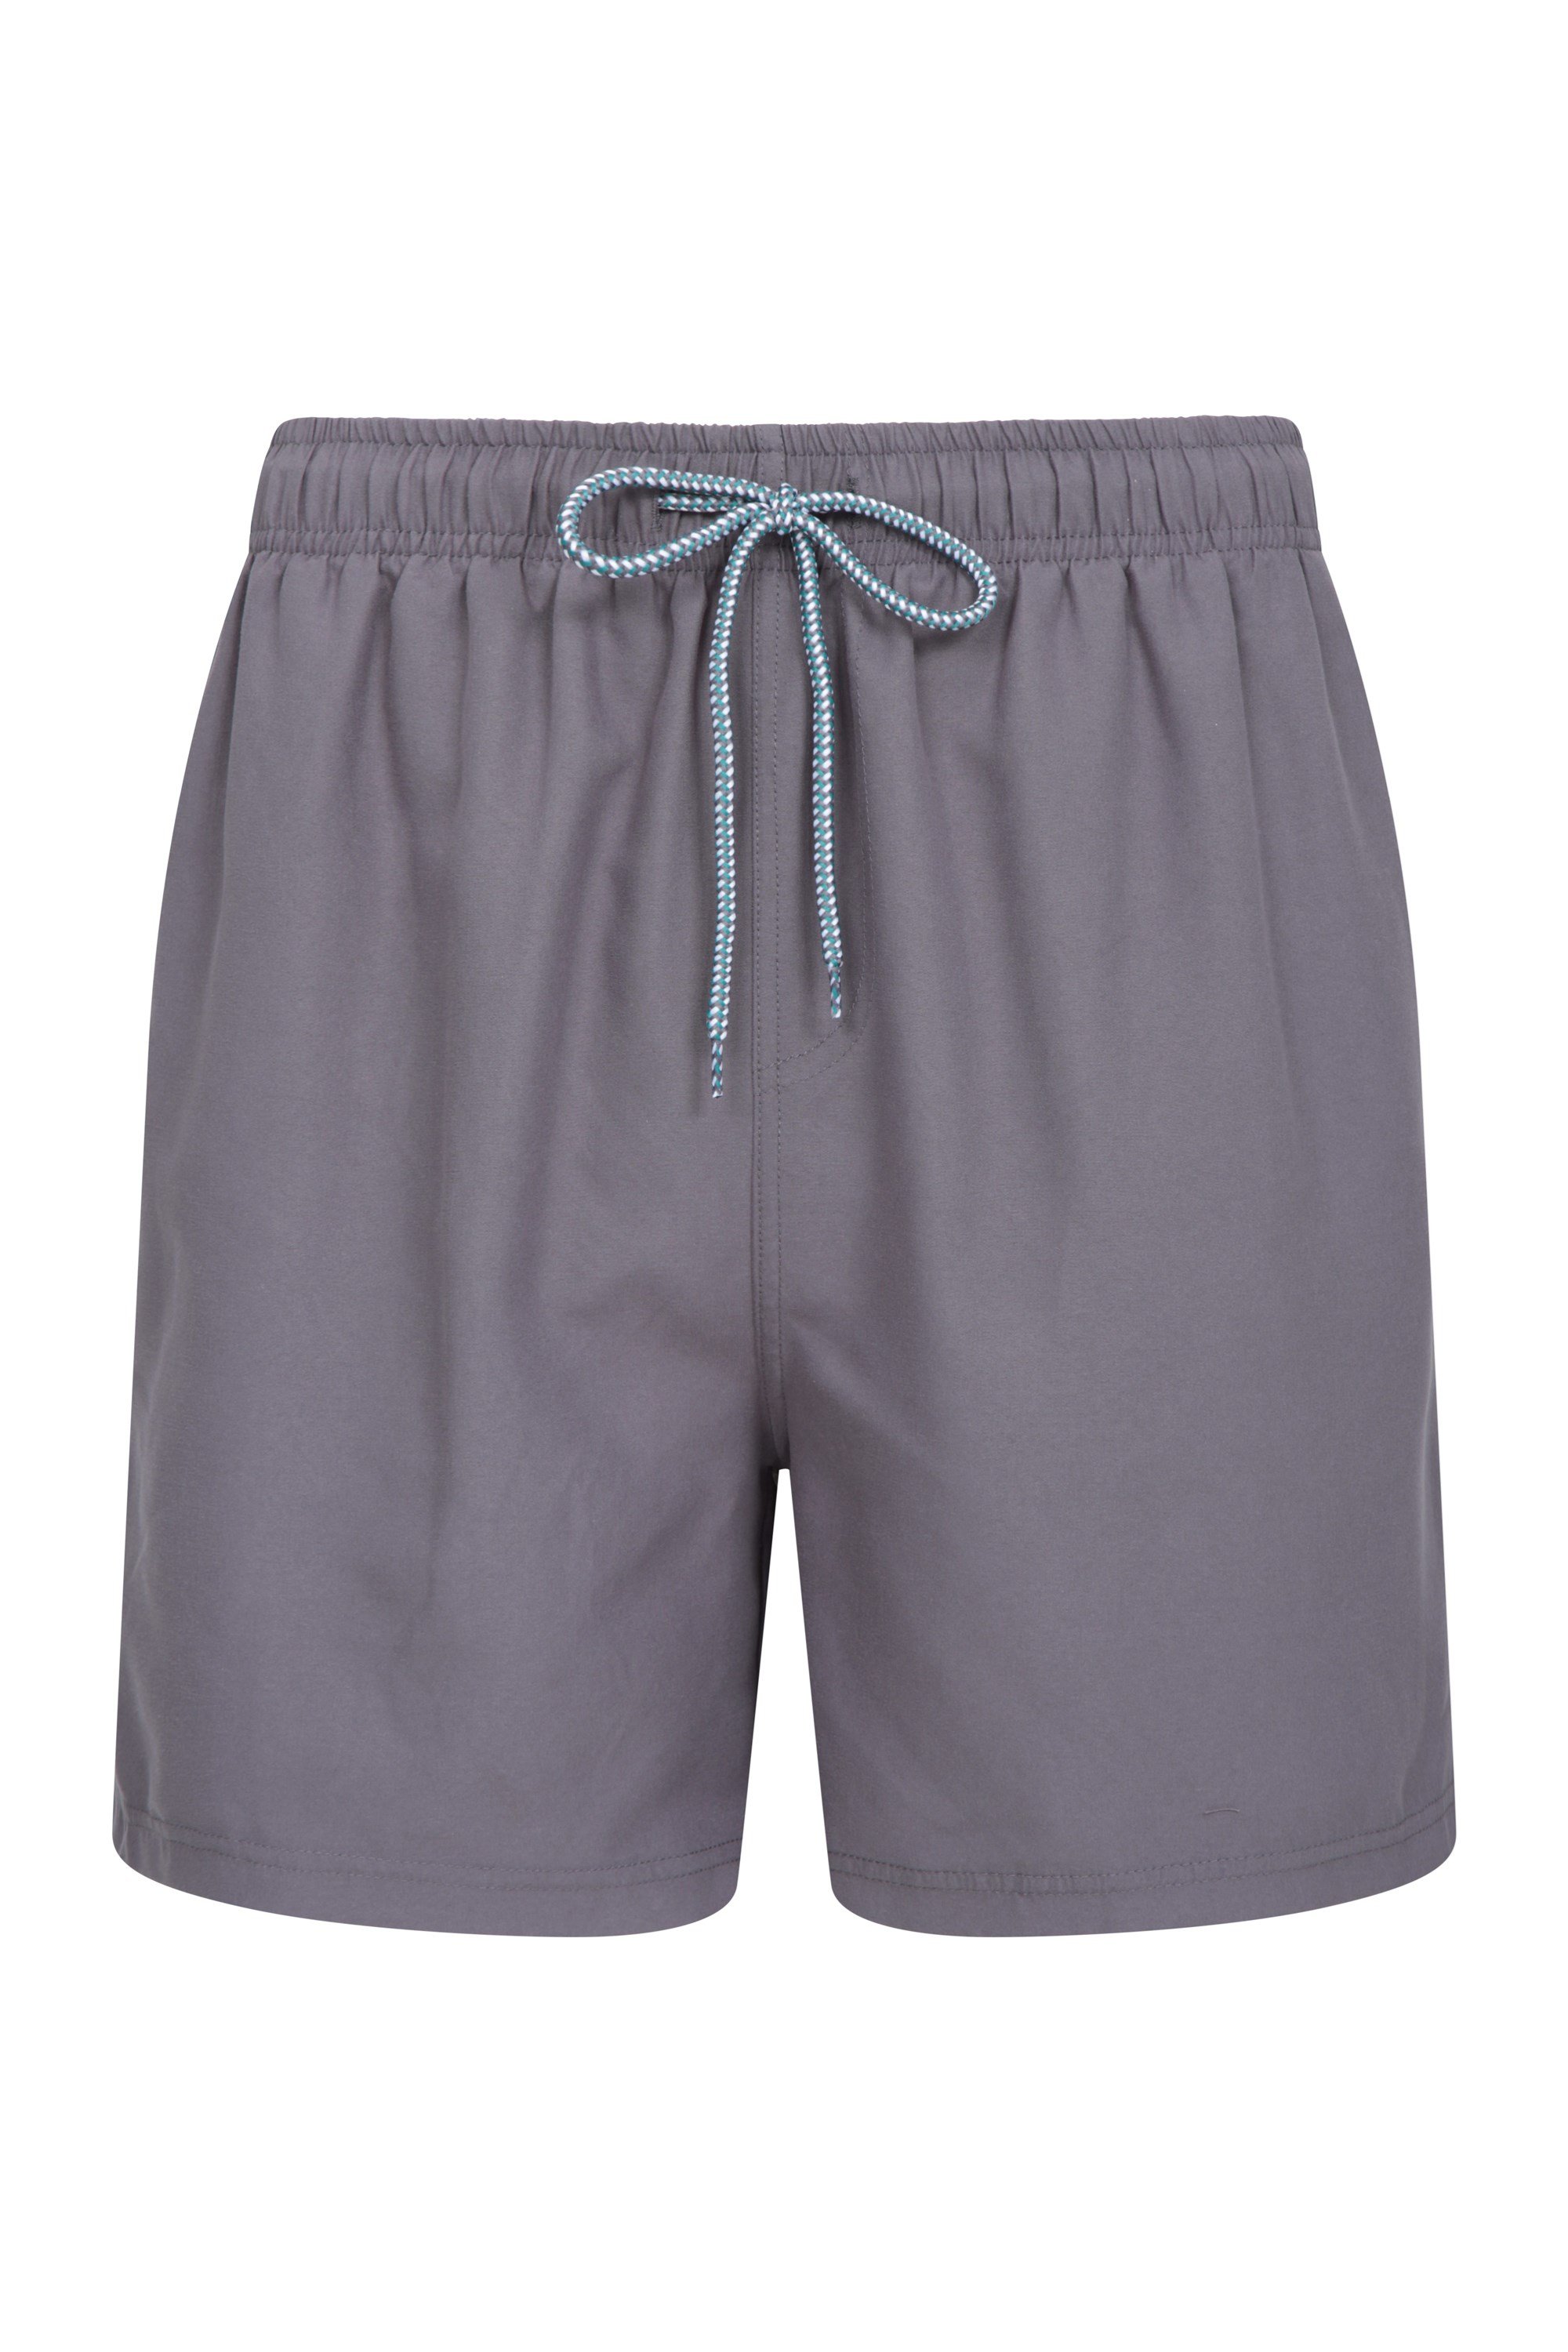 Aruba Mens Swim Shorts - Grey